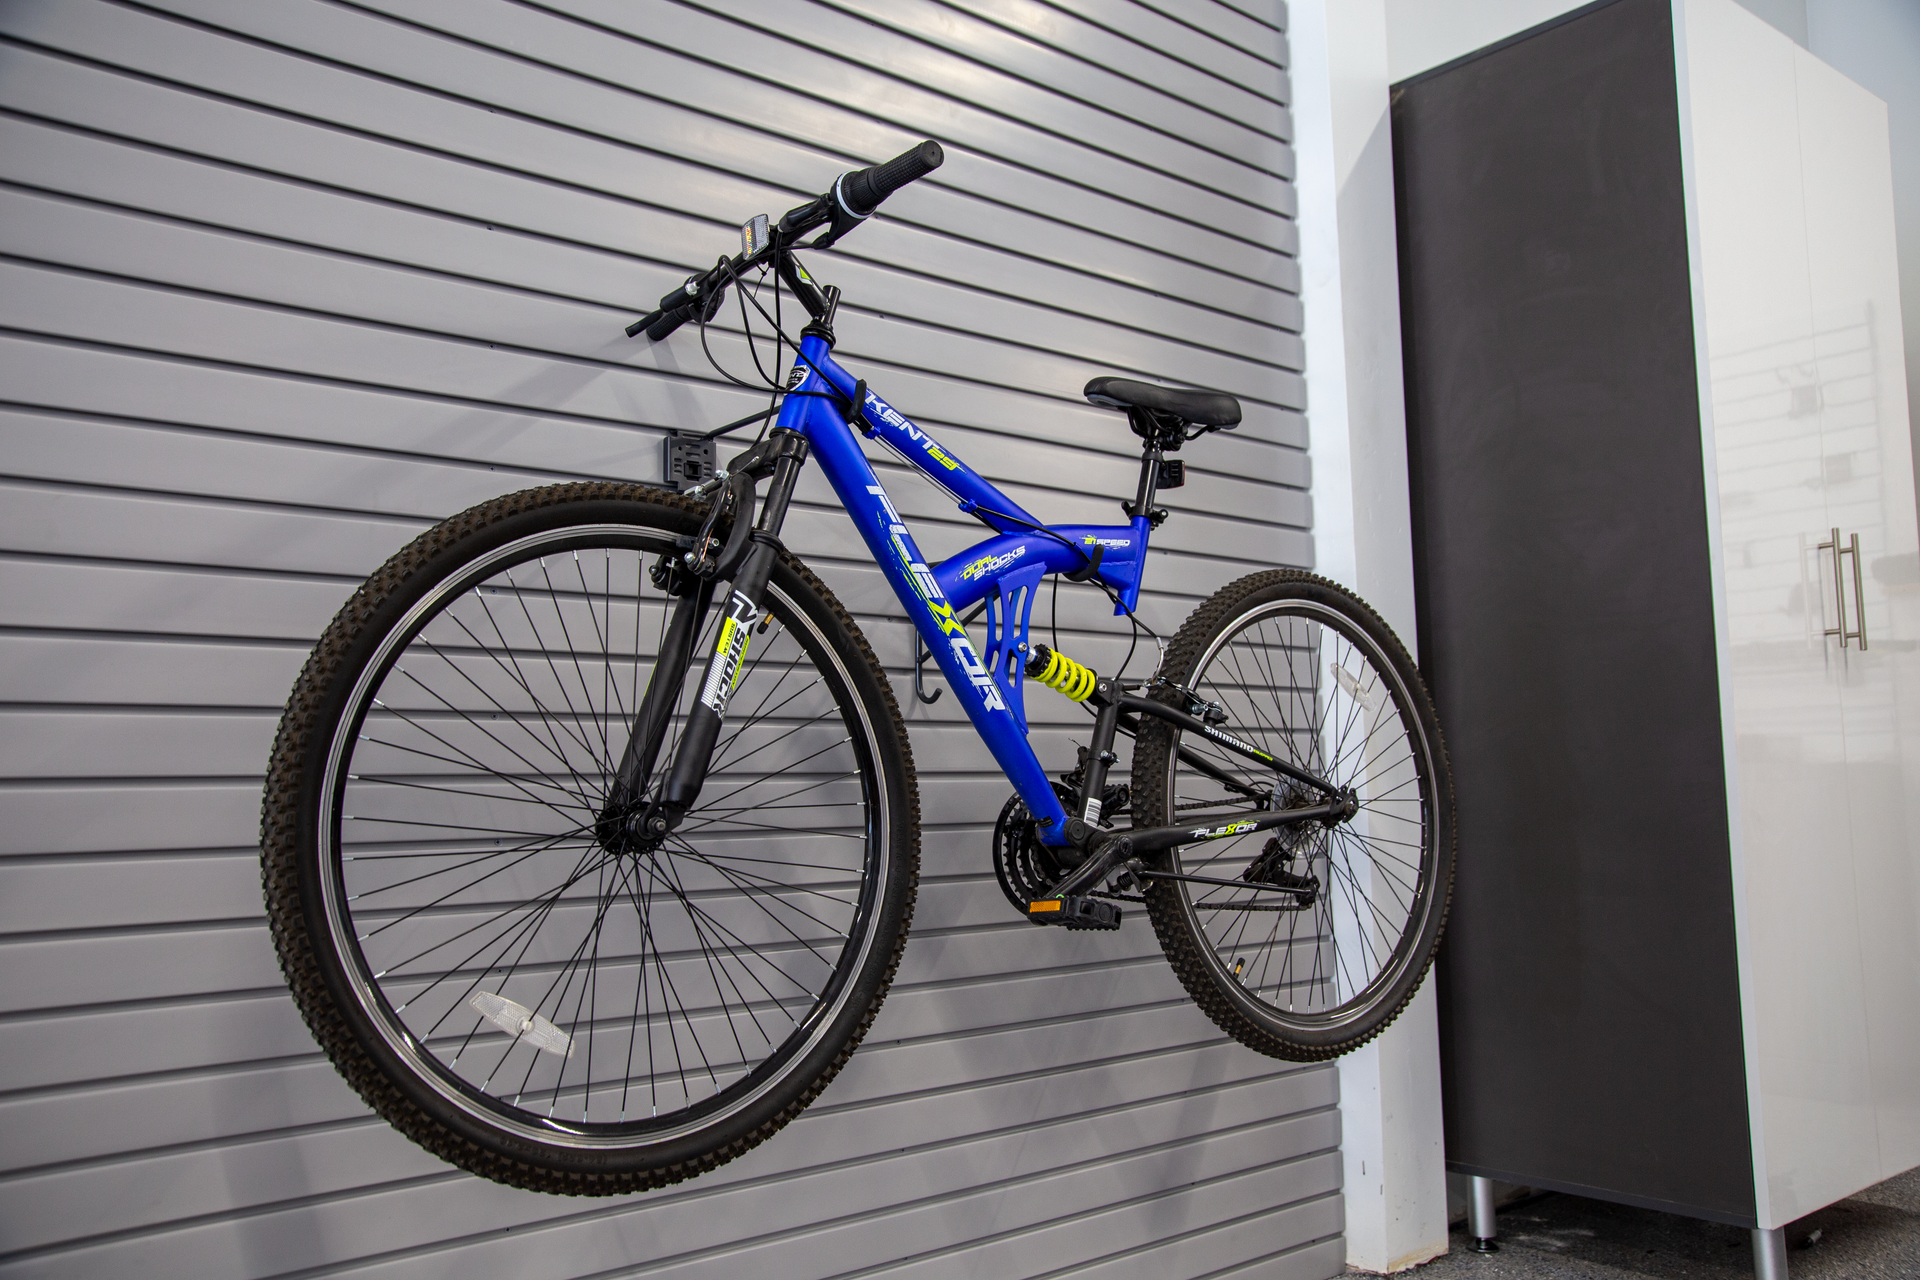 Bike Storage using slat walls in garage